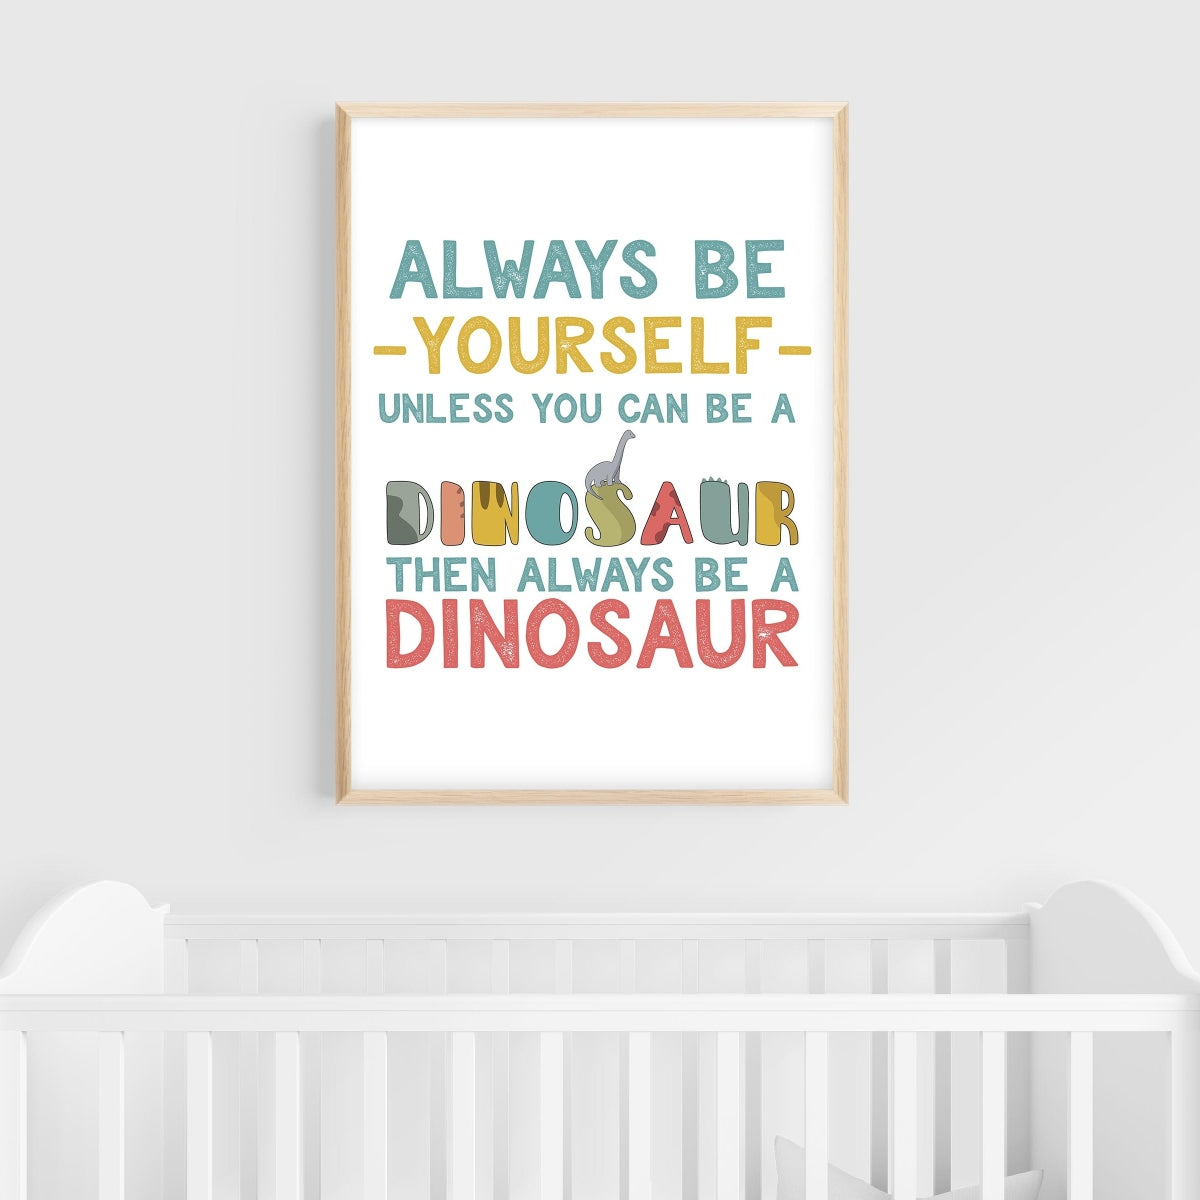 Dinosaur Wall Art for Nurseries and Kid's Rooms - Be a Dinosaur